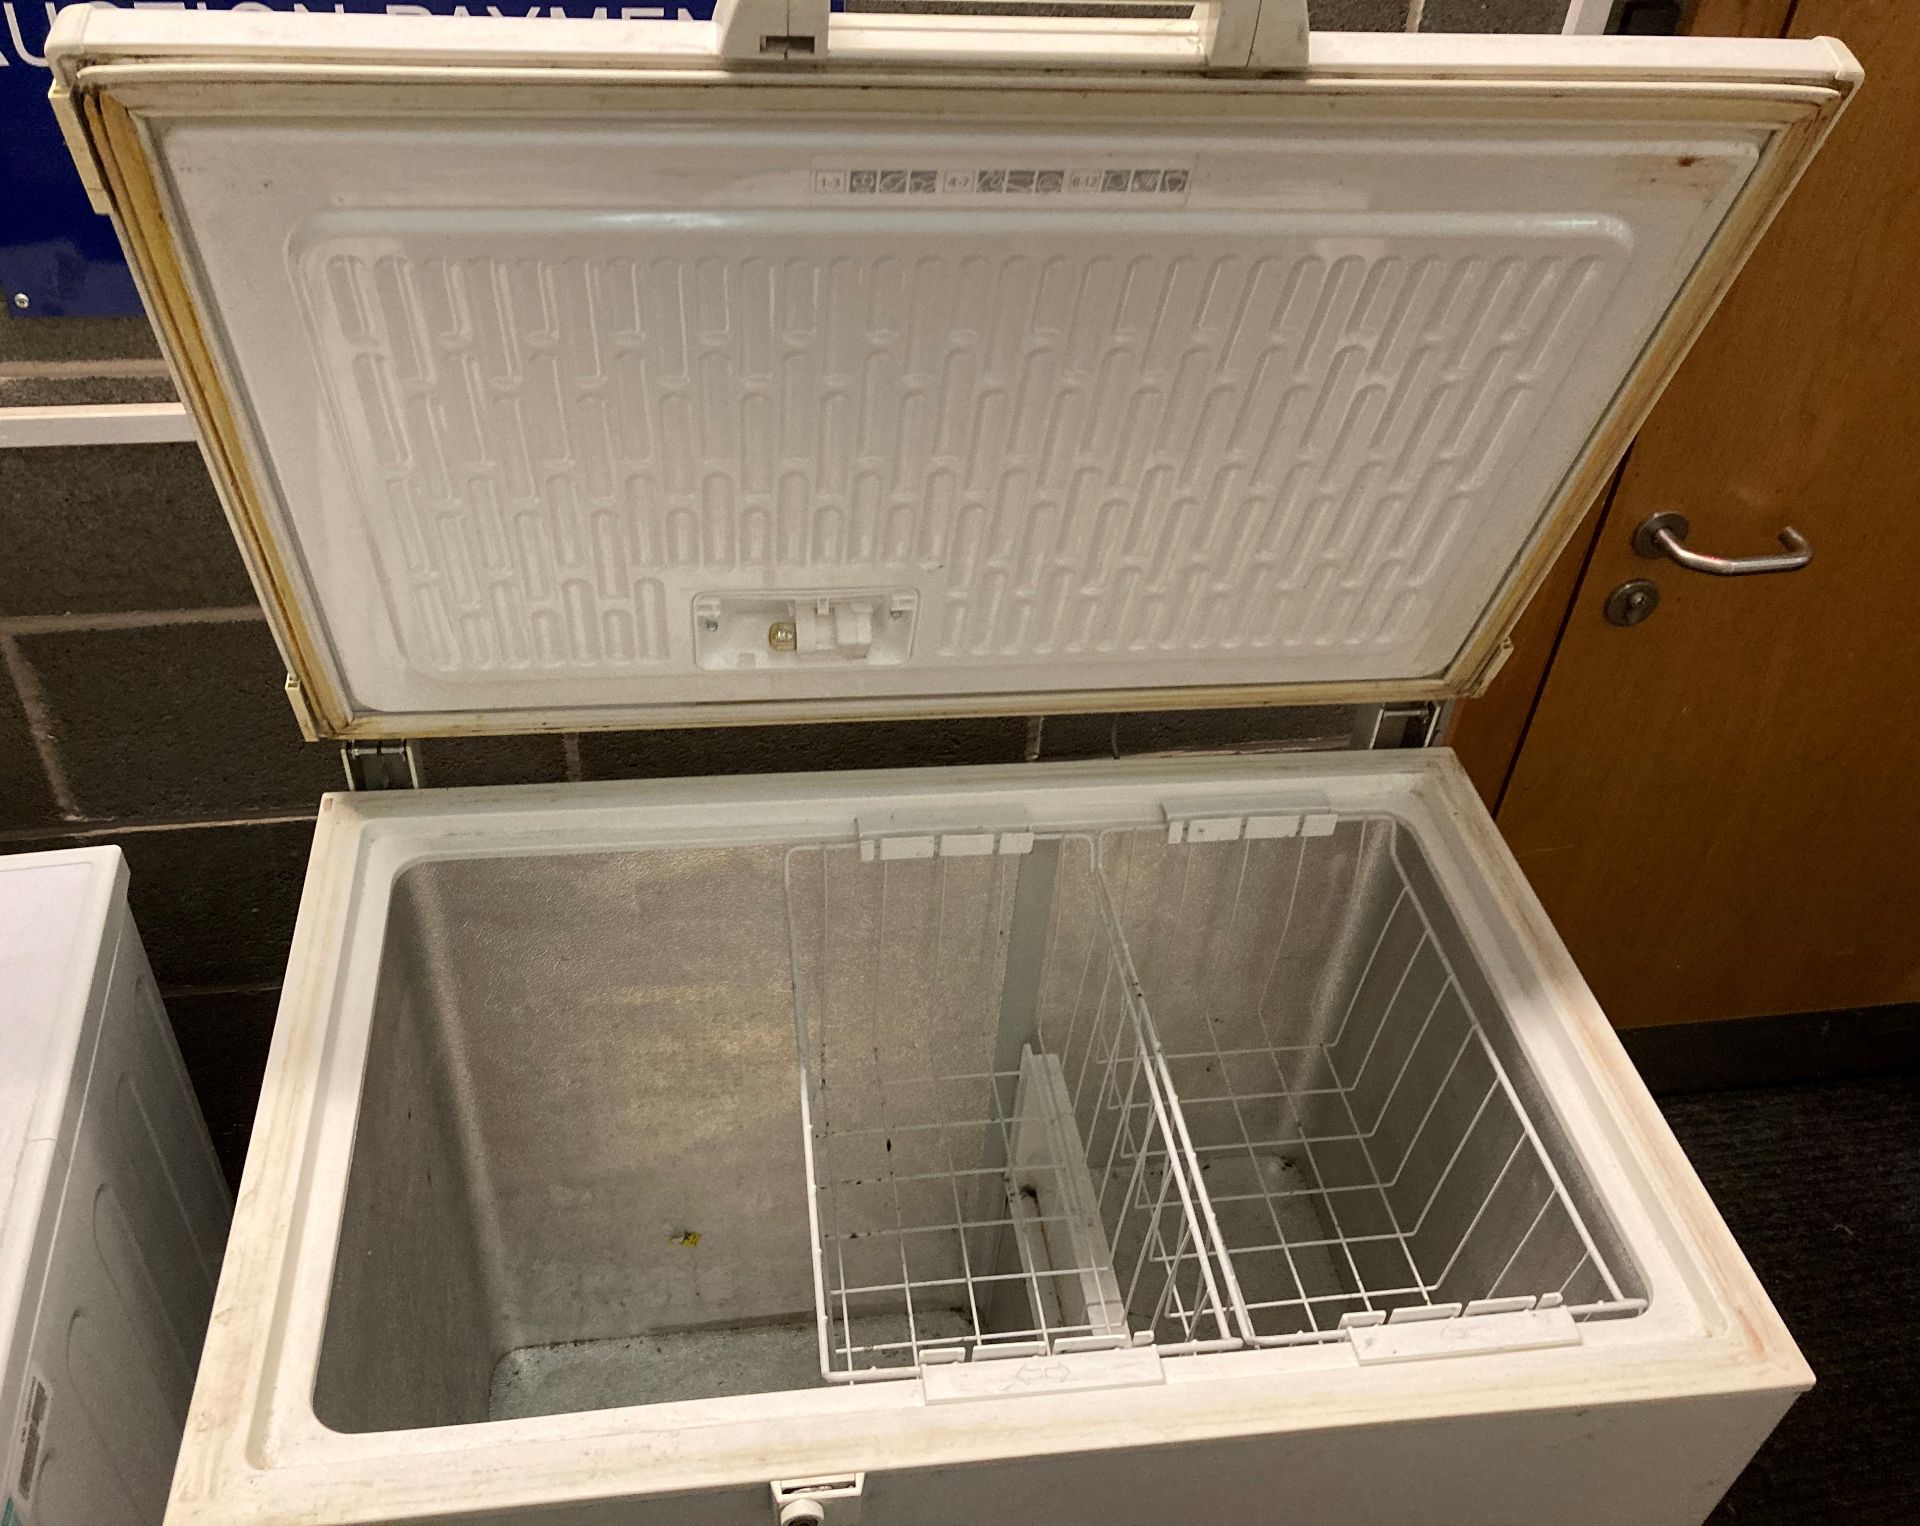 Whirlpool WCN 9-1 9 litre chest freezer (saleroom location: PO) - Image 2 of 2